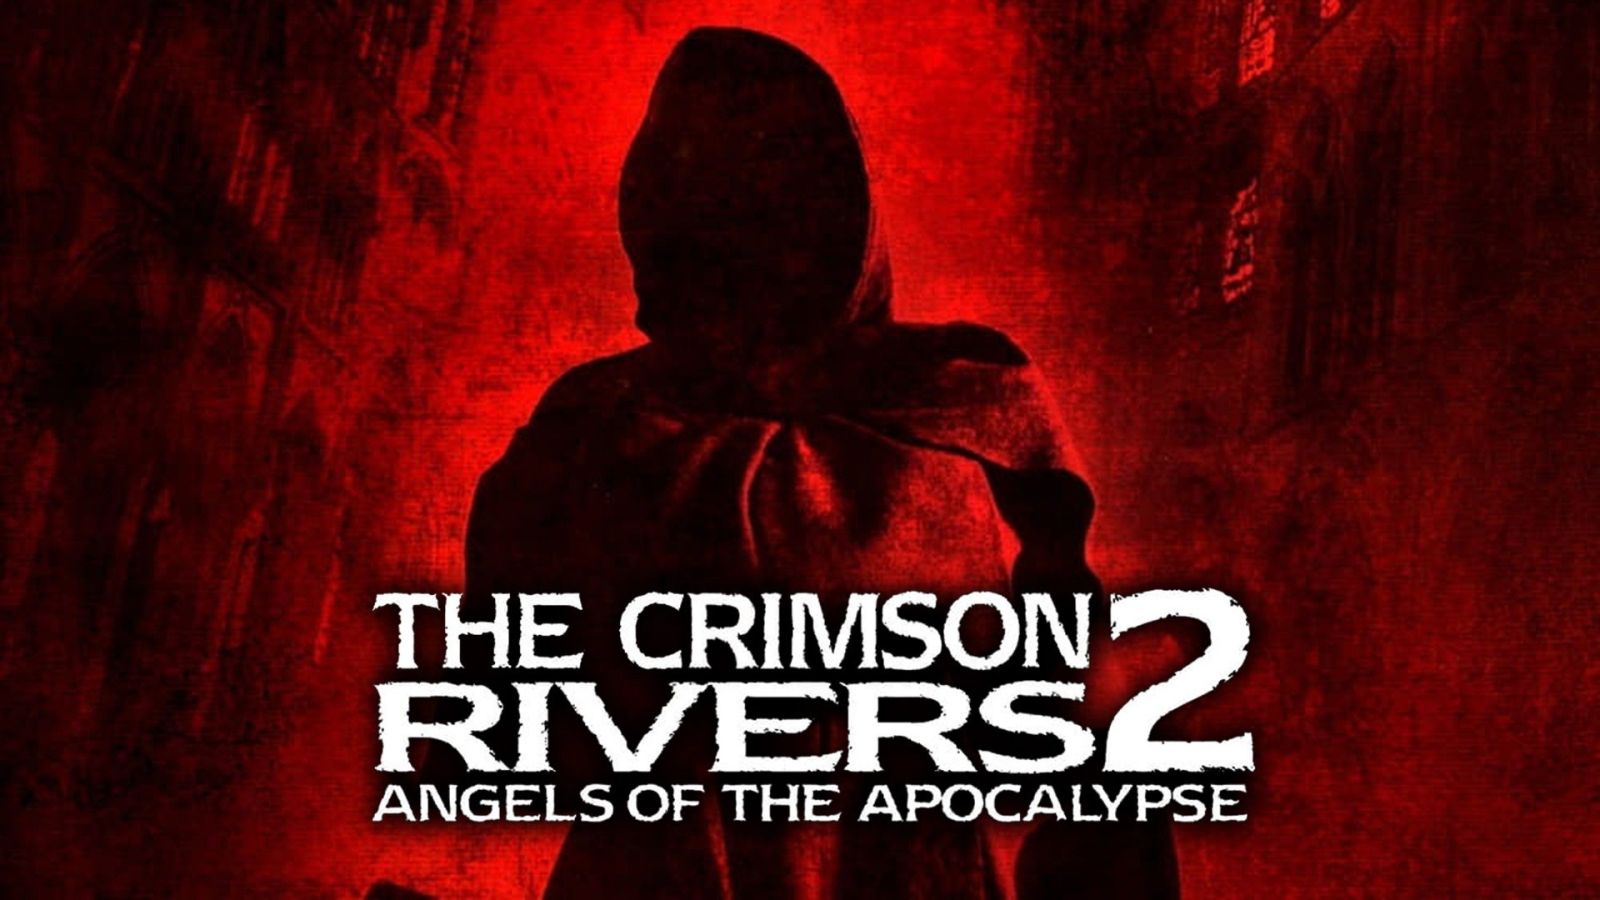 Thiên sứ khải huyền - Crimson rivers ii: angels of the apocalypse